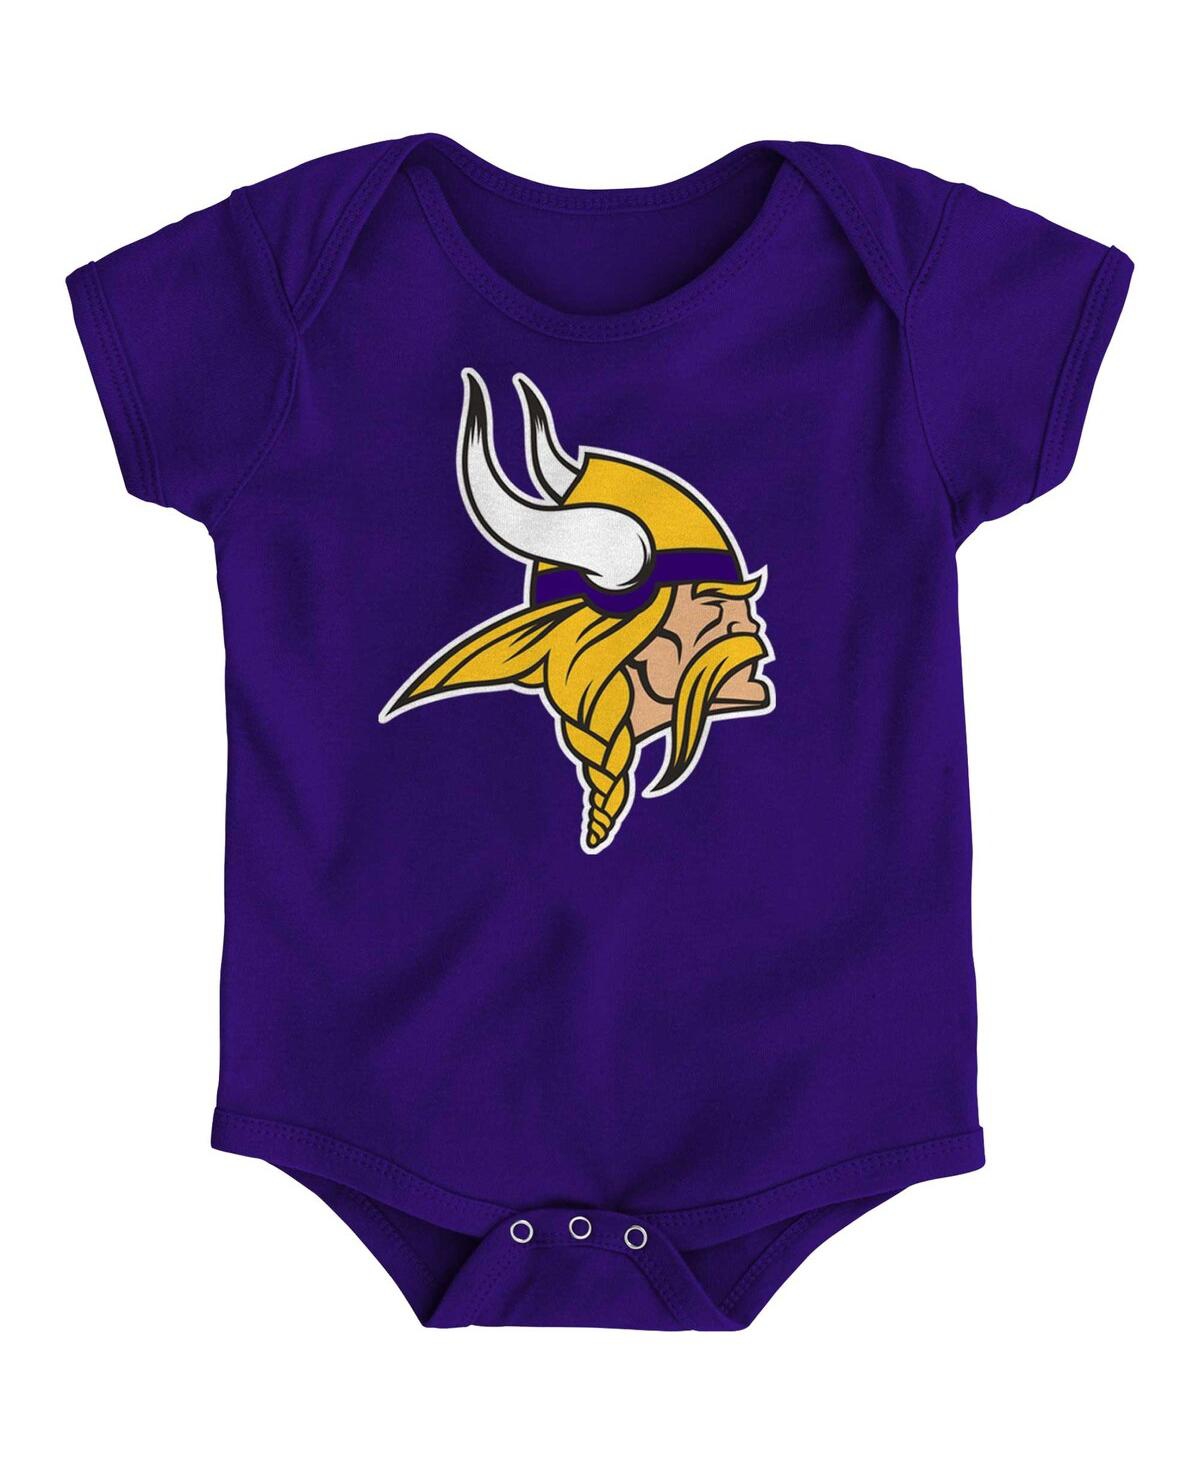 Shop Outerstuff Baby Boys And Girls Purple Minnesota Vikings Team Logo Bodysuit